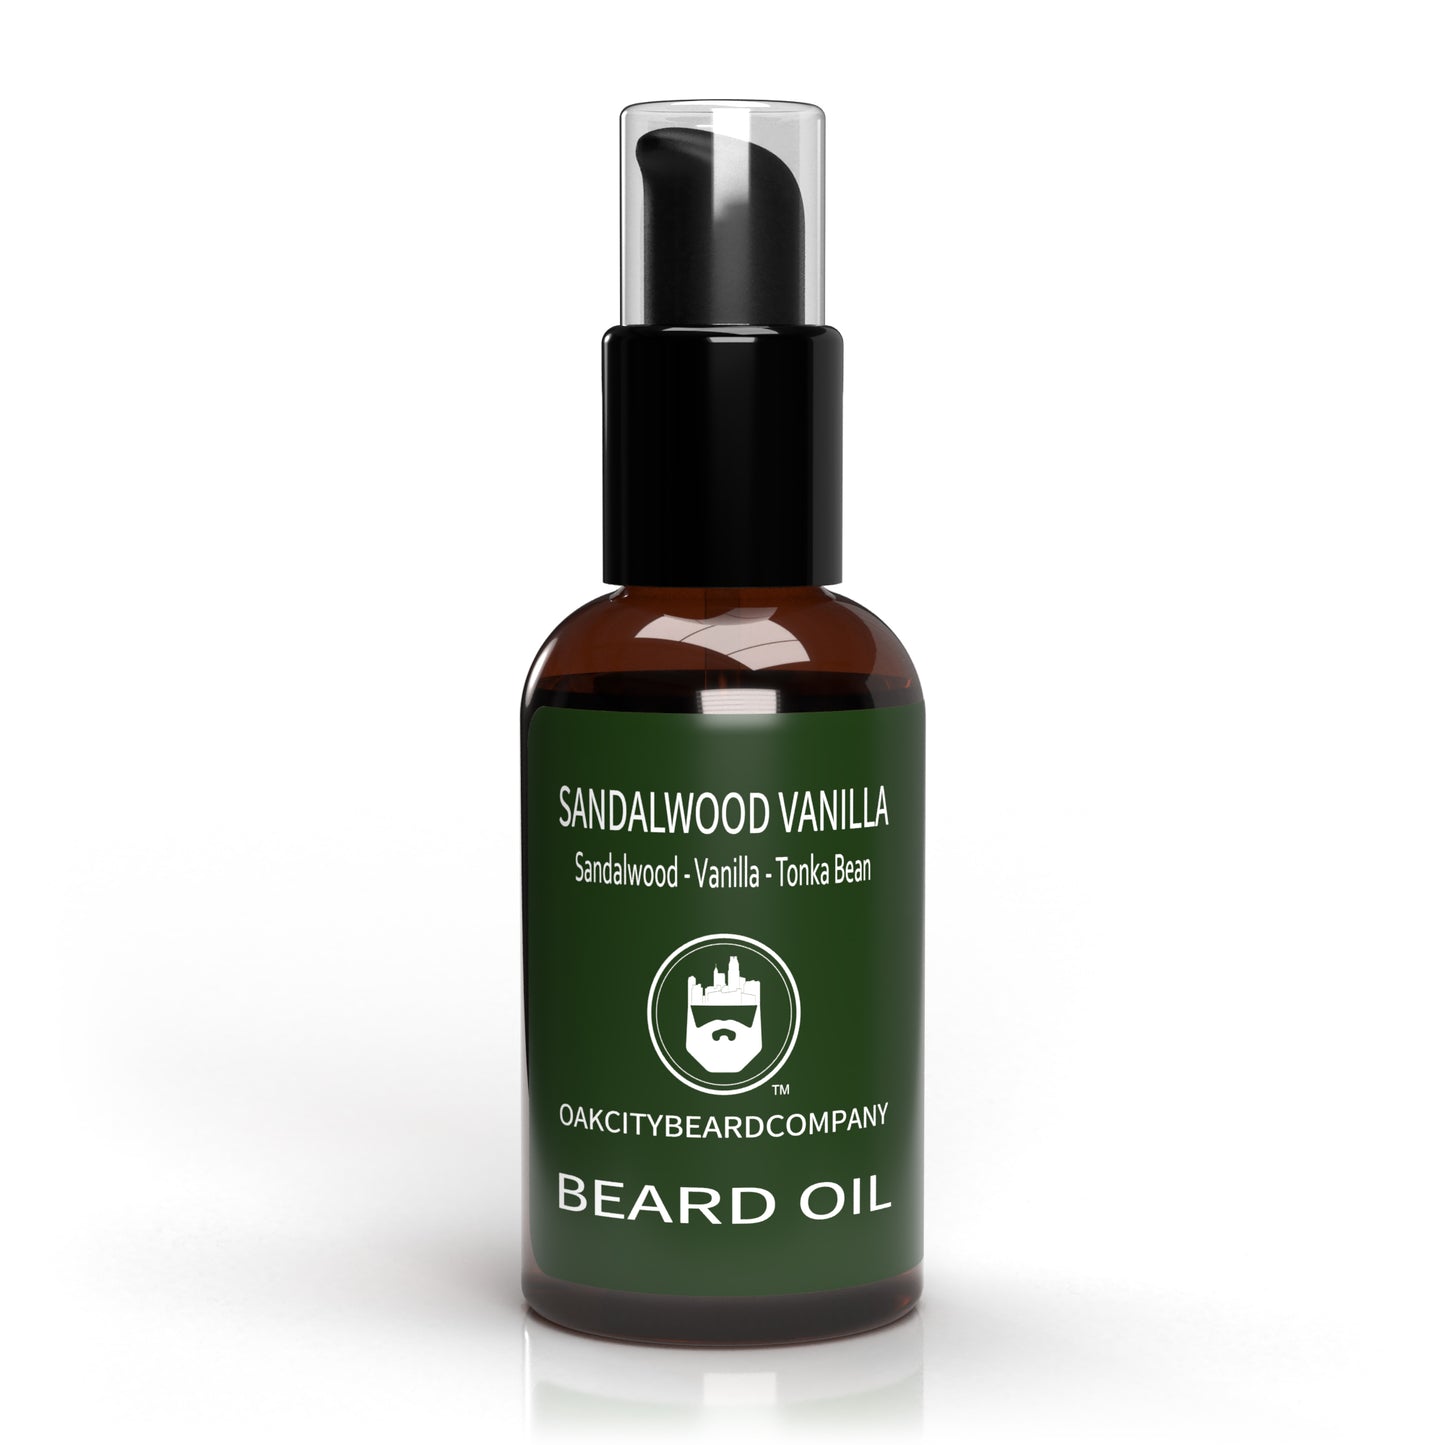 Sandalwood Vanilla (Beard Oil) by Oak City Beard Company